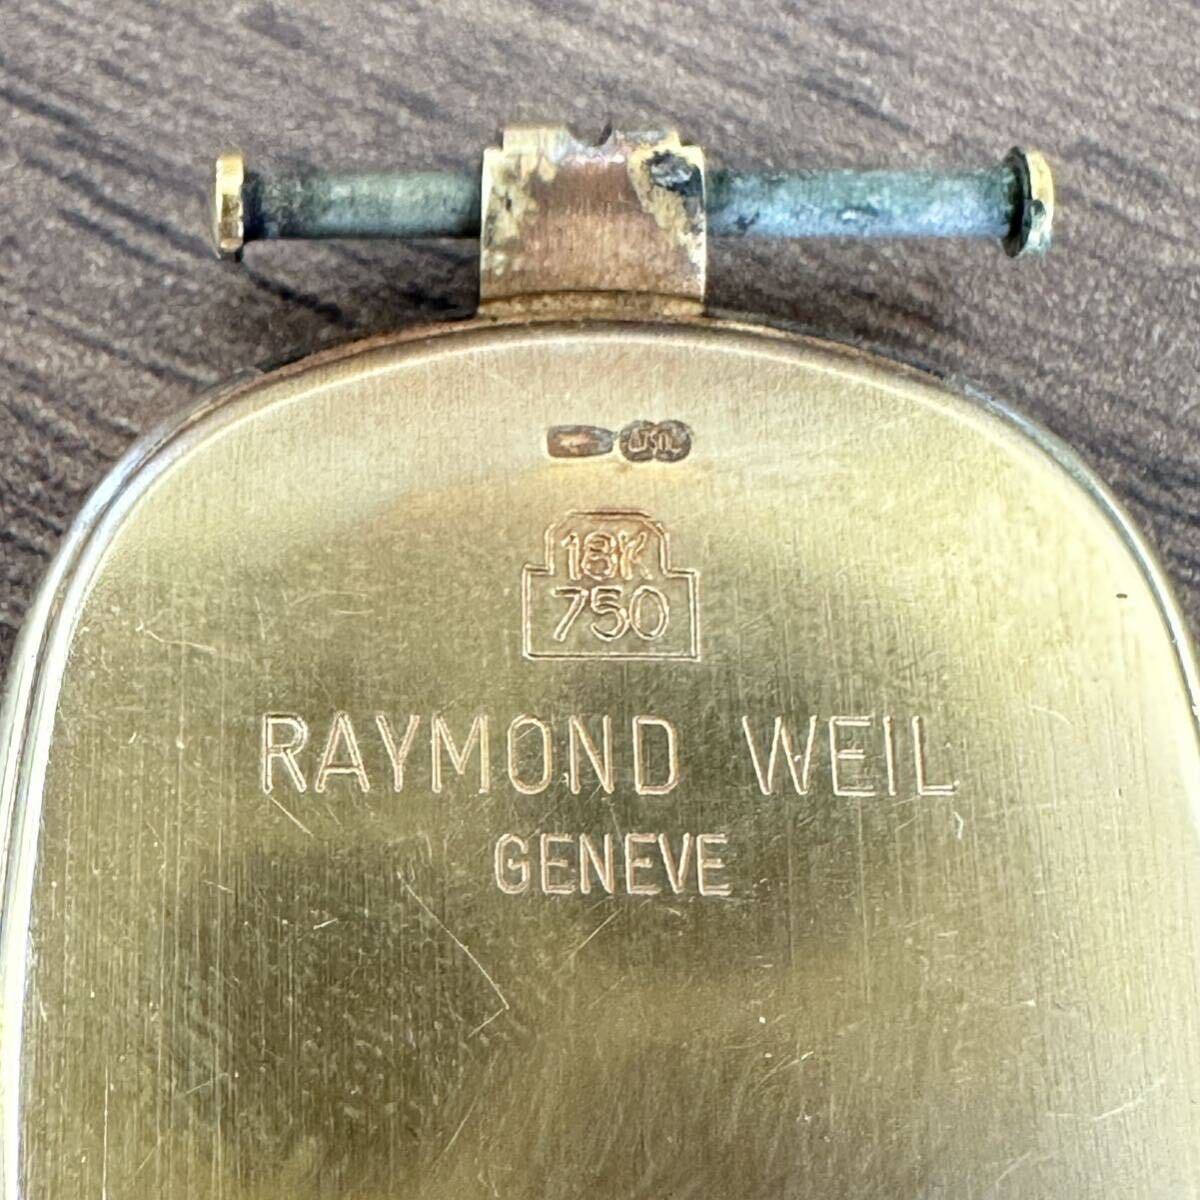 RAYMOND WEILレイモンドウィル/18K 750/ゴールド/ SWISS/ 稼働品/ 腕時計/ジャンク品の画像5